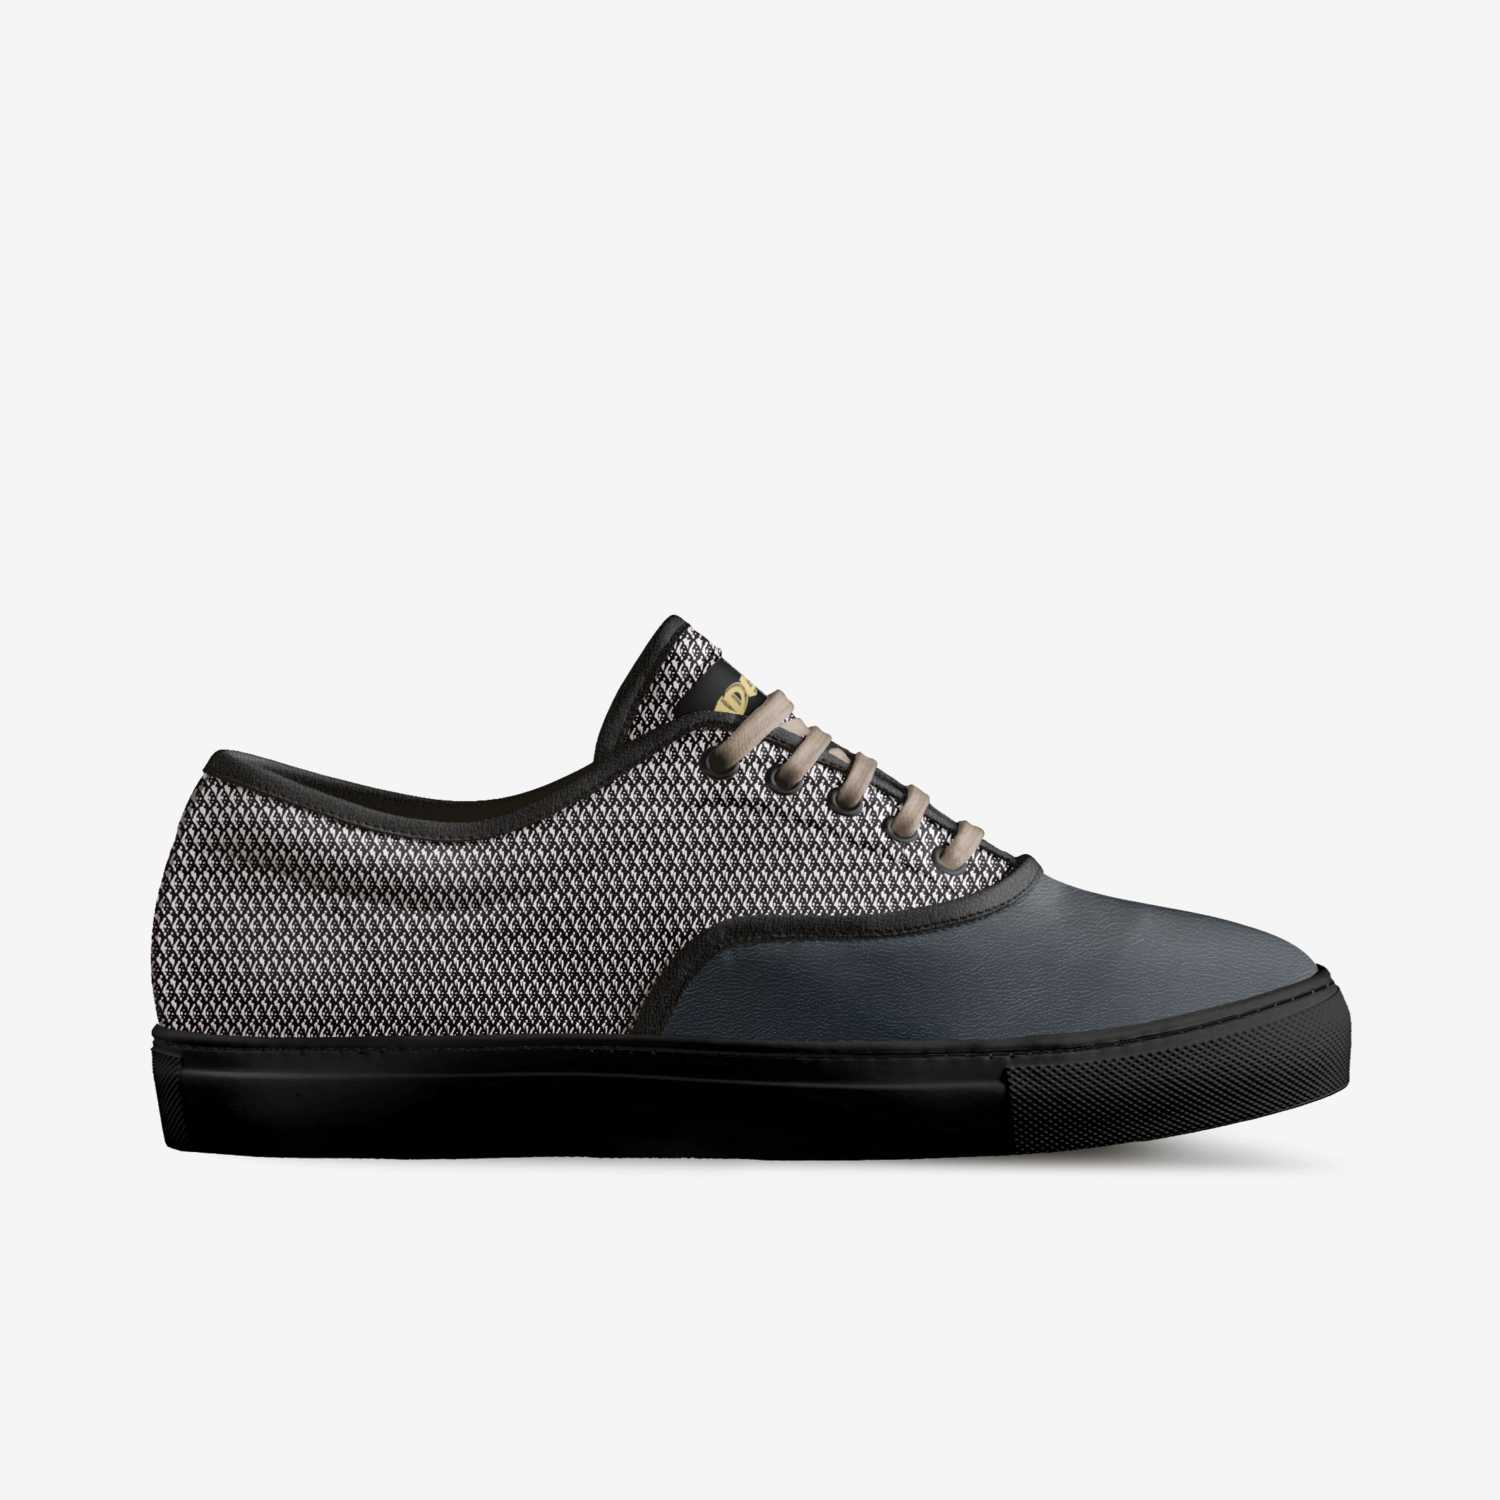 ADAPT FOOTWEAR custom made in Italy shoes by Bryan De Salvo | Side view